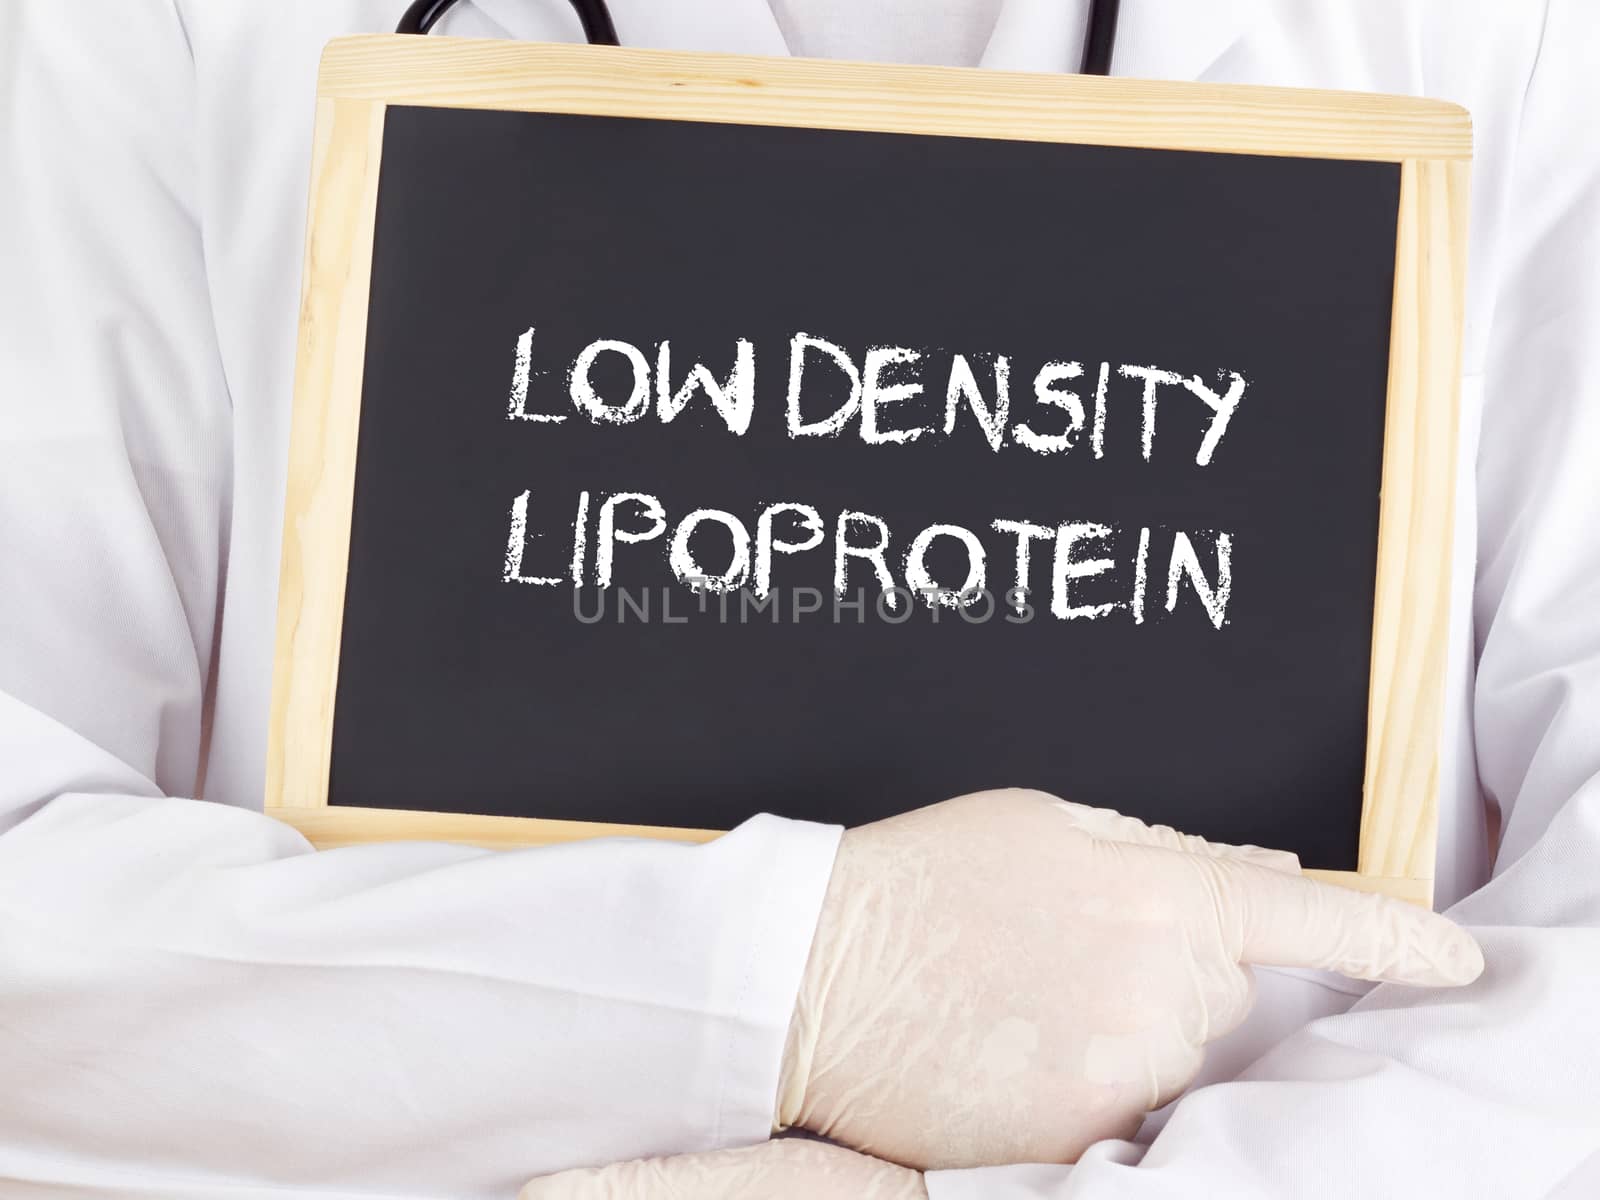 Doctor shows information: low density lipoprotein in german